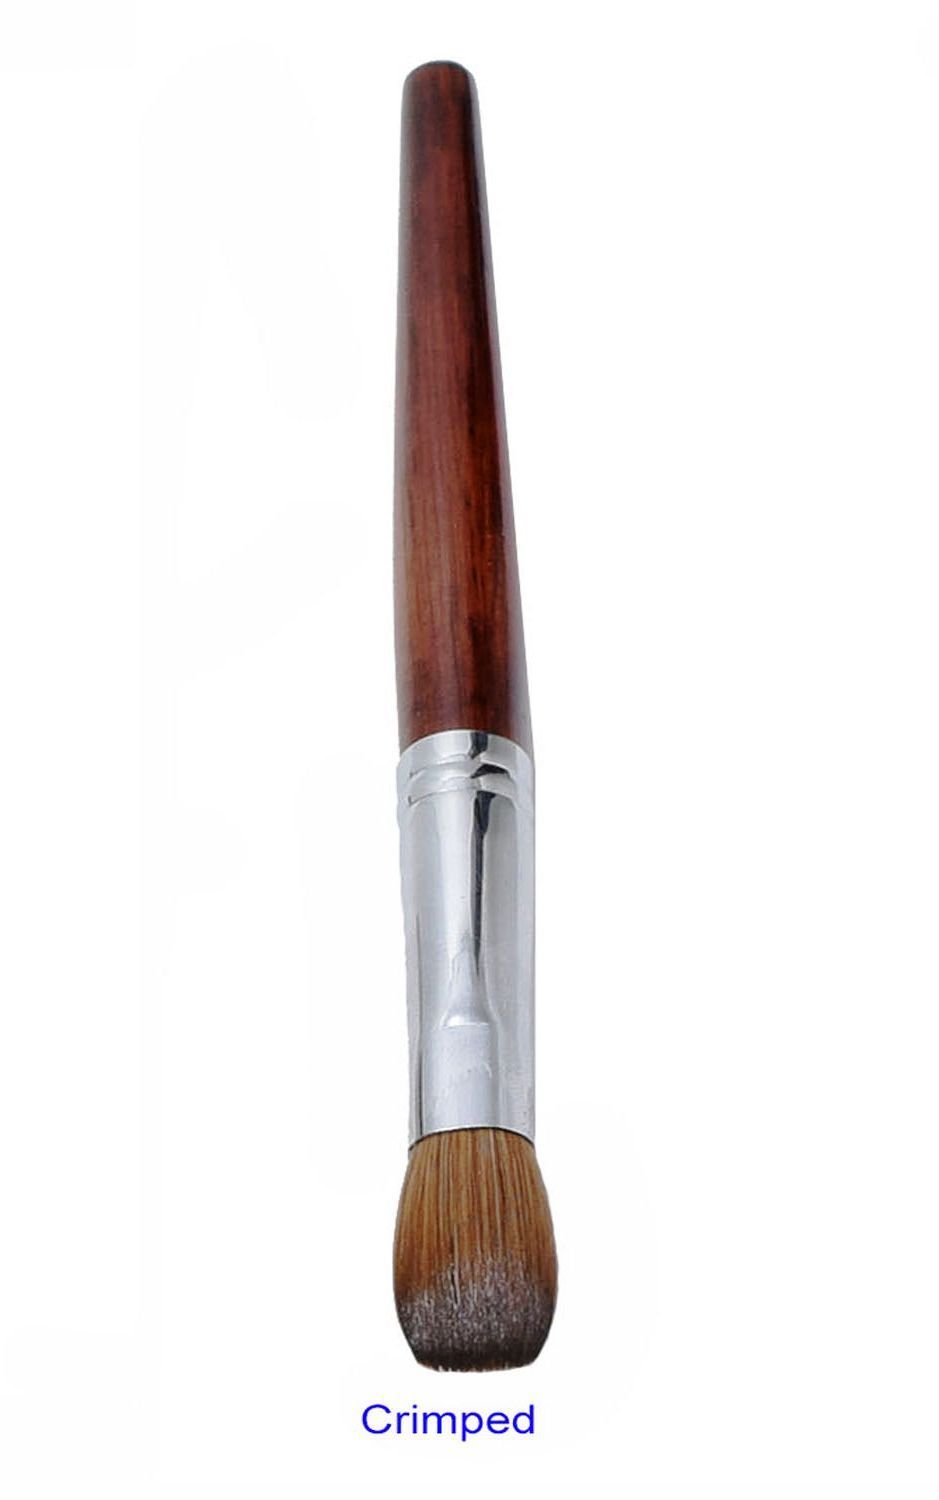 777 Redwood Acrylic Brush 